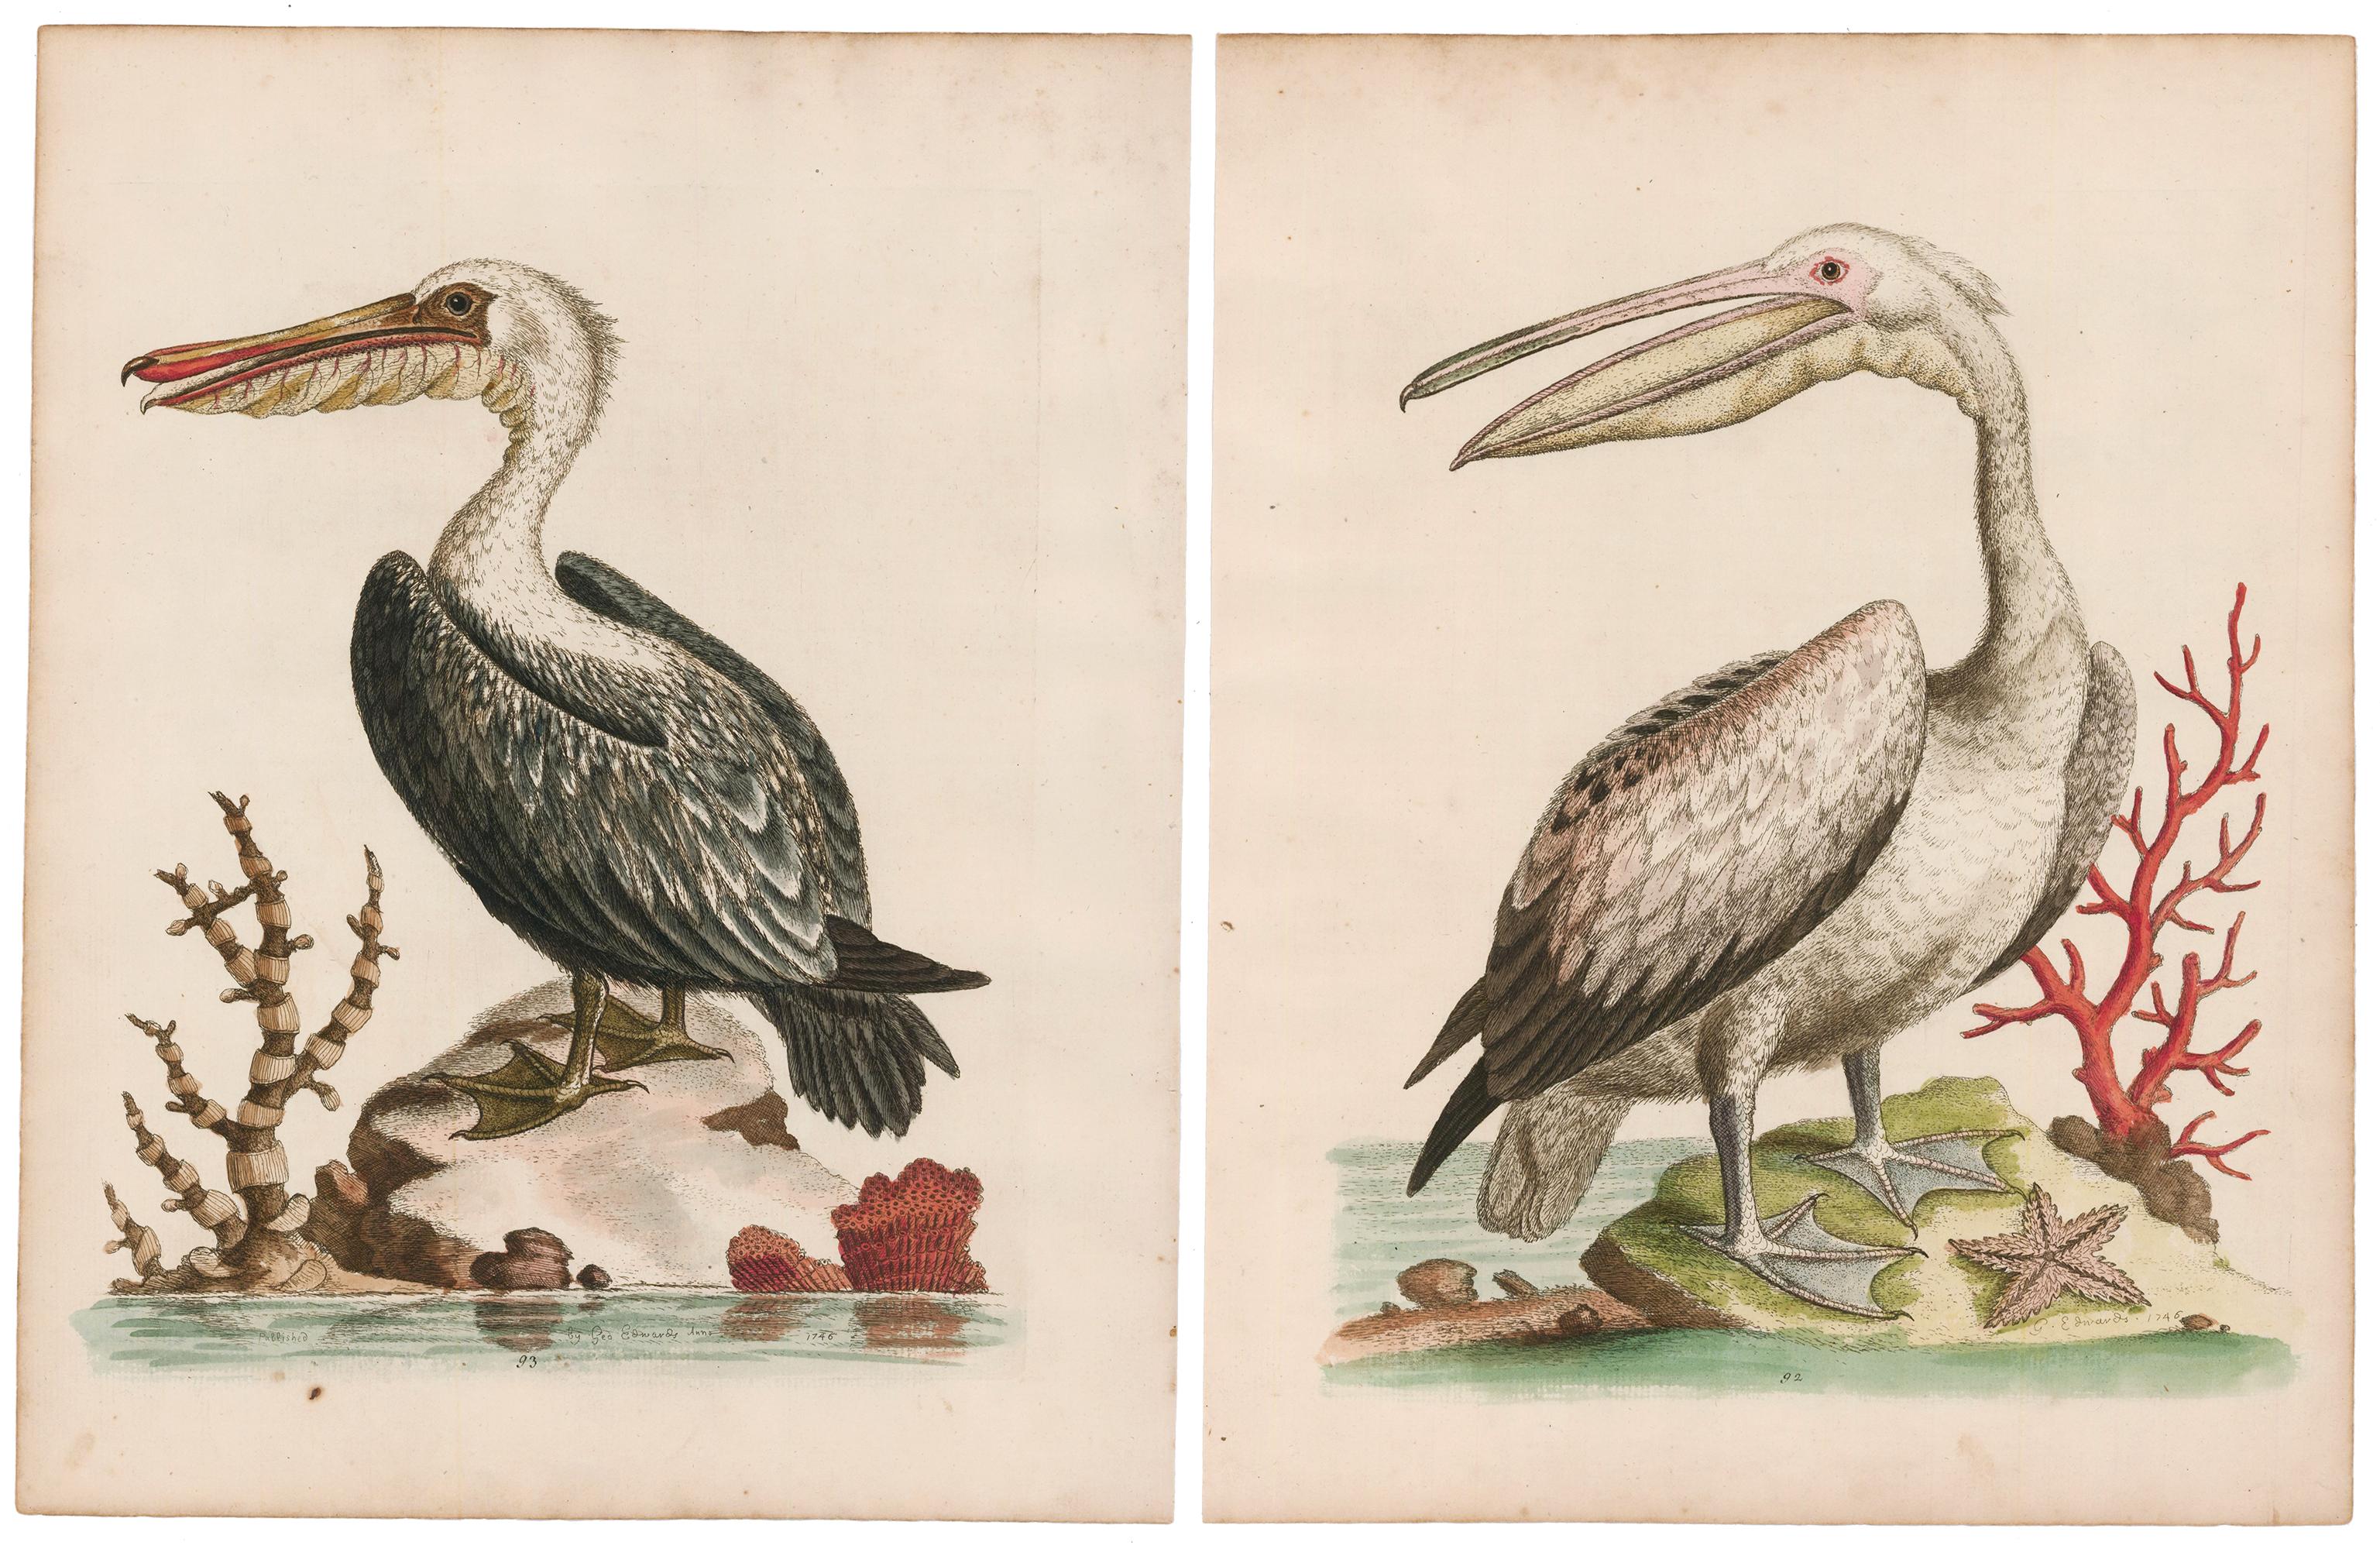 George Edwards Animal Print - Pair of Hand-Colored Pelican Engravings